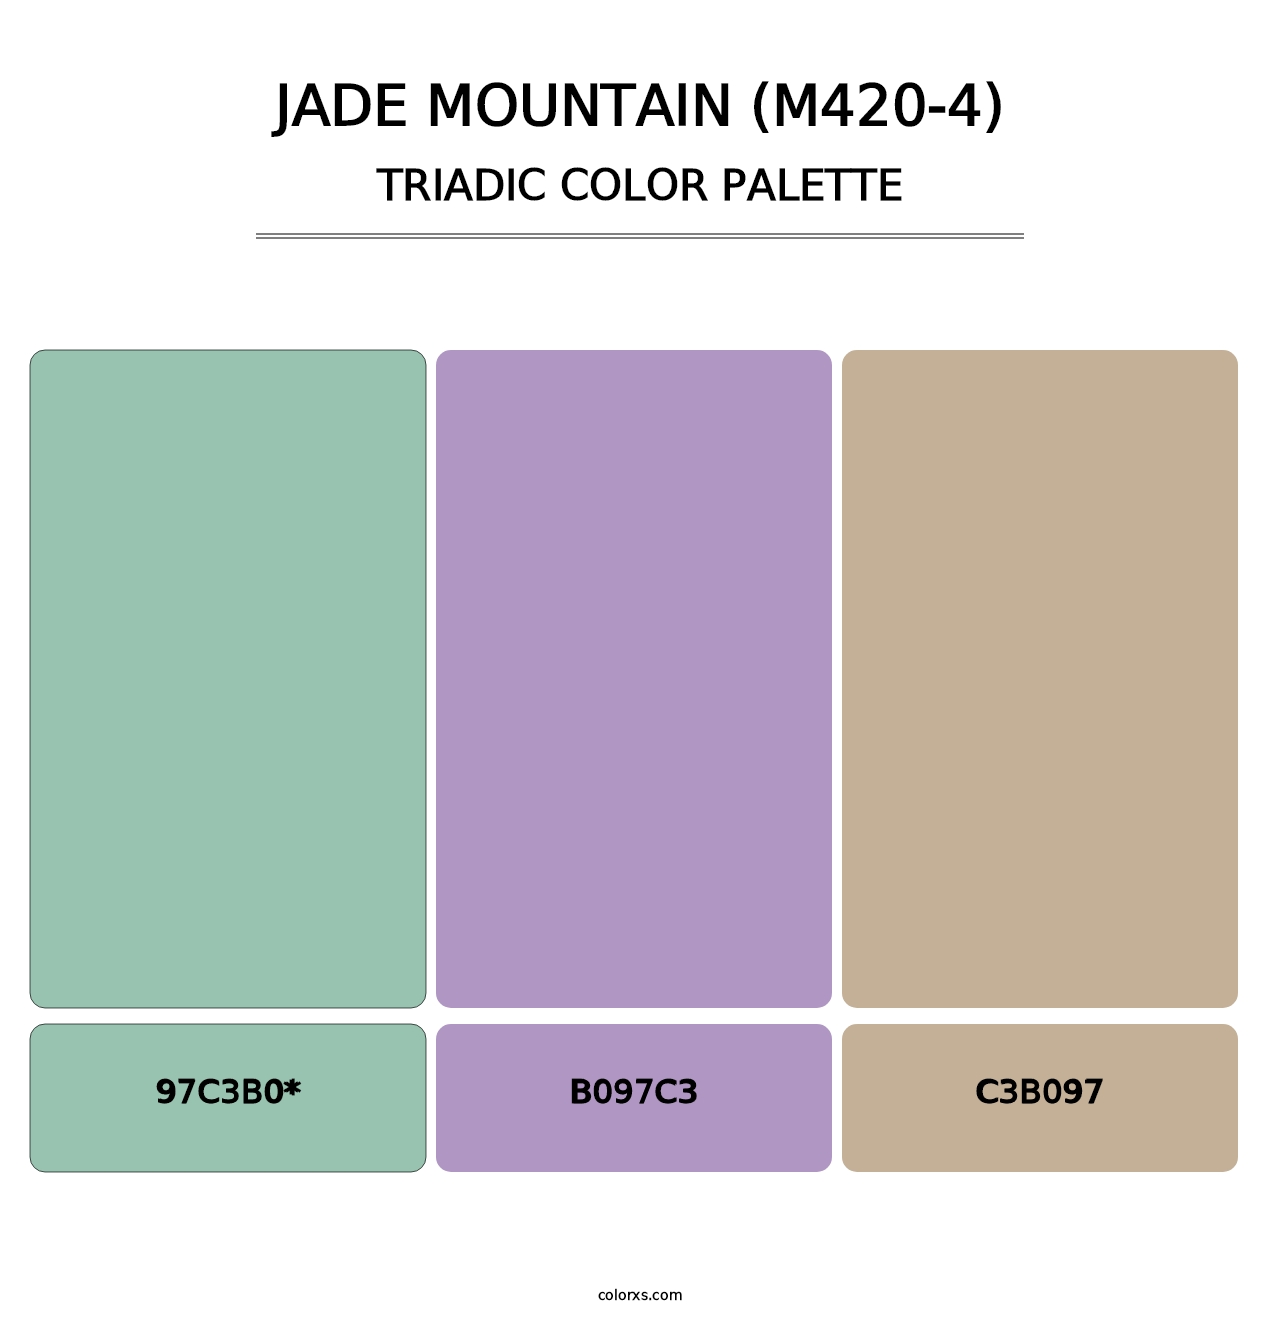 Jade Mountain (M420-4) - Triadic Color Palette